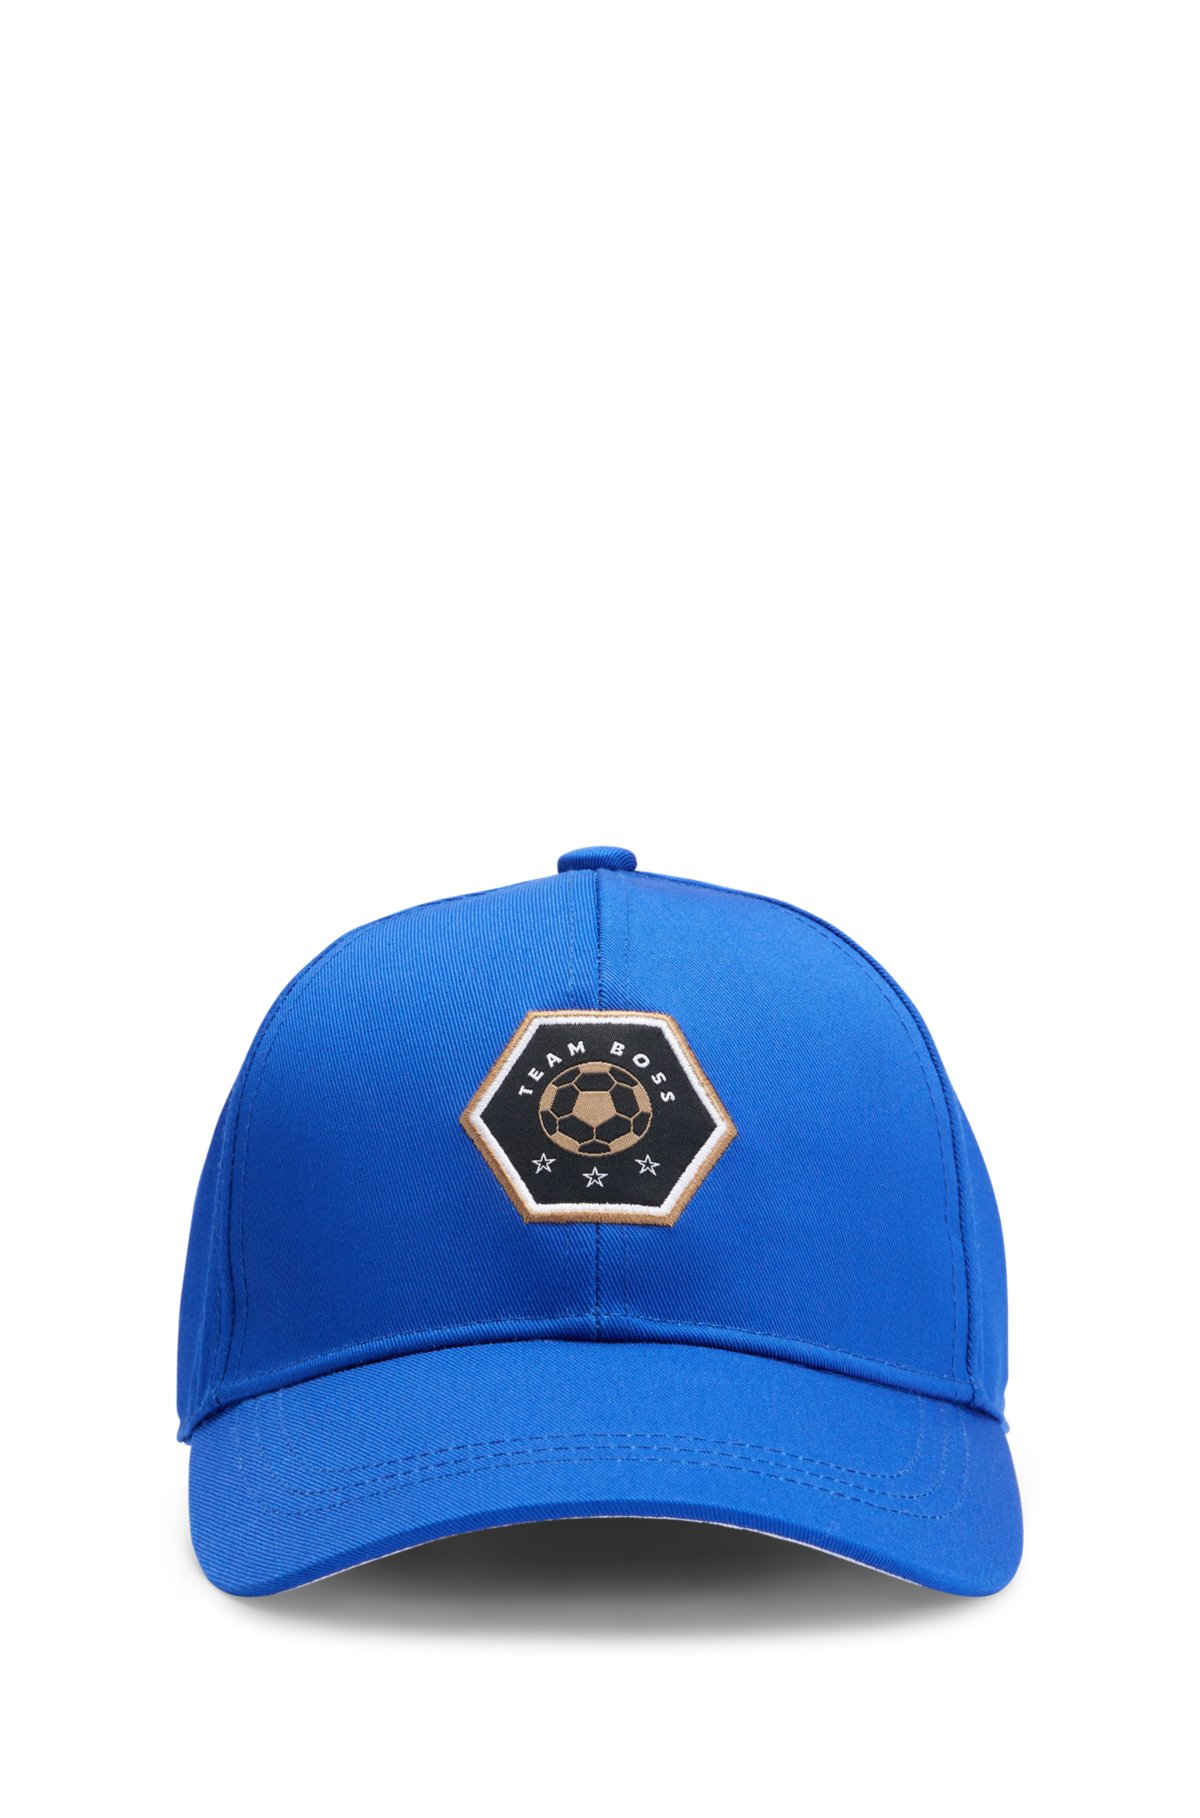 Kids' cap with logo badge, Blue